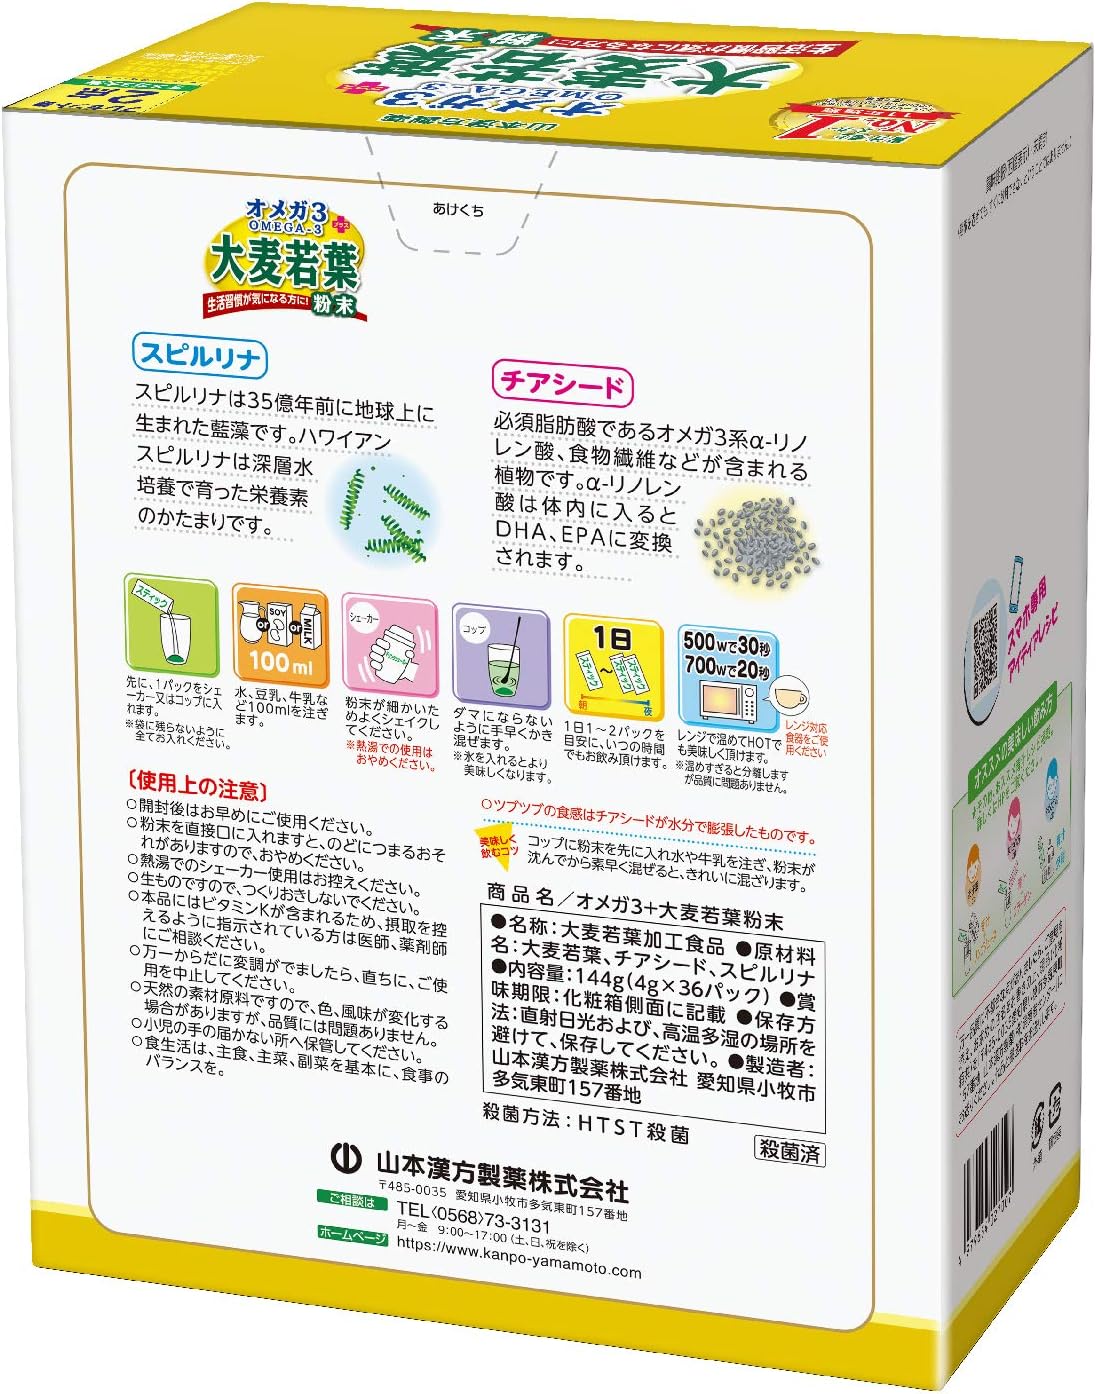 Yamamoto Kampo Pharmaceutical Omega 3 + Barley Grass Powder 4gx36 packets